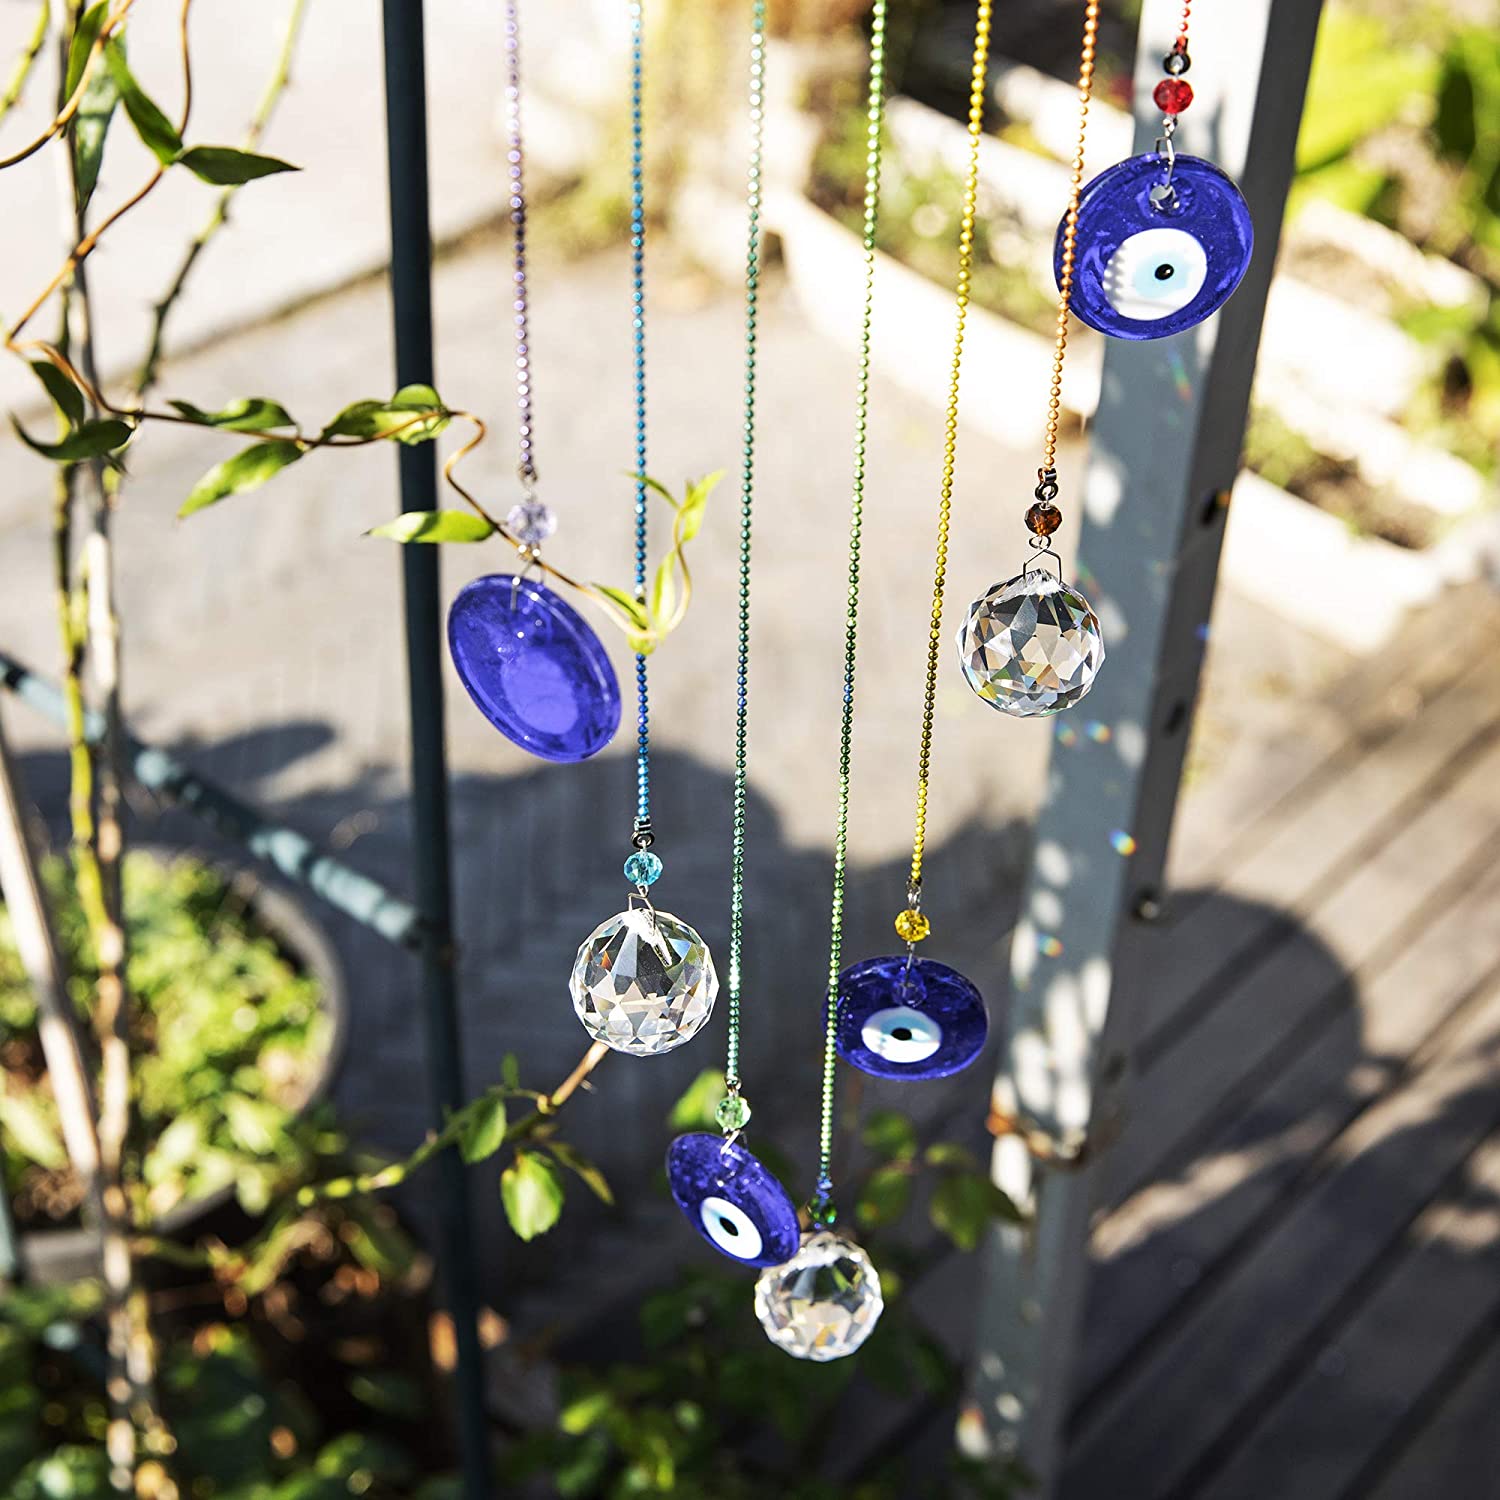 Hanging Crystals Suncatcher Ornament Turkish Blue Evil Eye Decor Crystal Ball Prisms Rainbow Maker Pendant for Window Garden